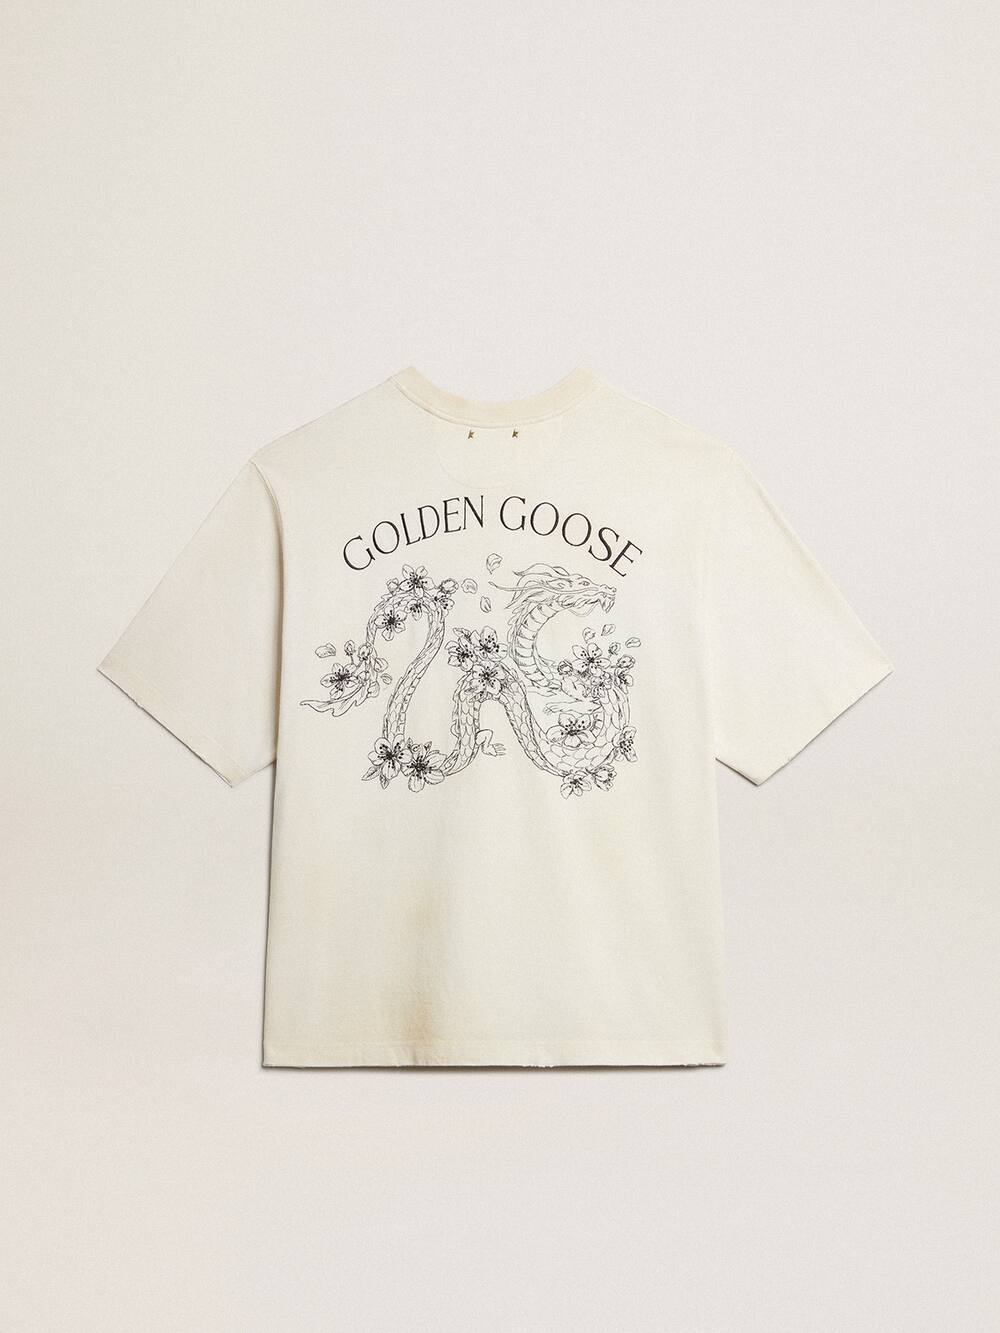 Golden Goose - T-Shirt CNY color bianco vissuto in 